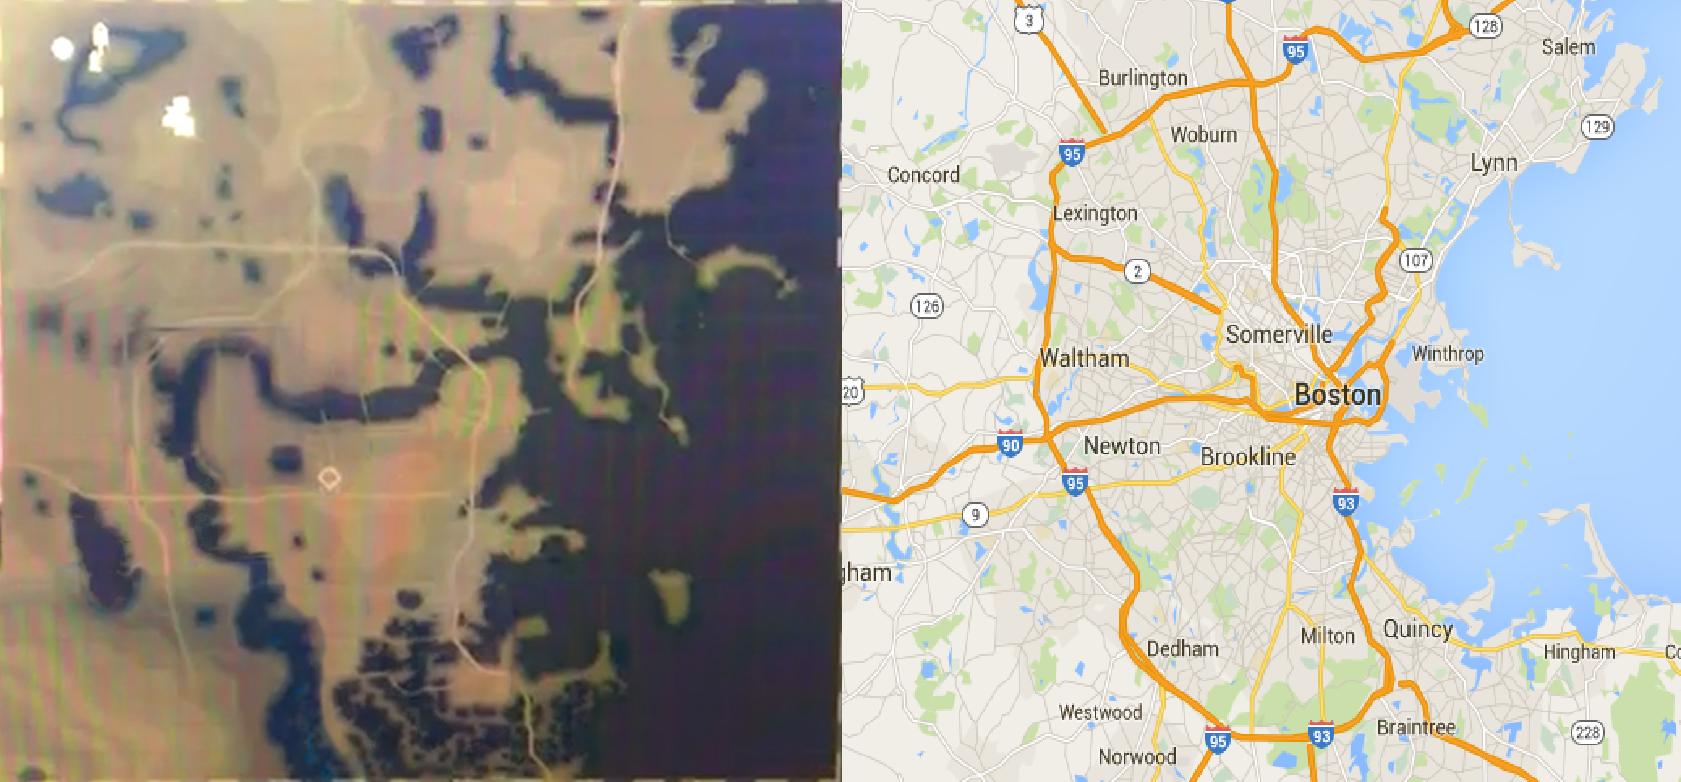 Fallout 4 Map vs Real Life Boston City Map Comparison ...